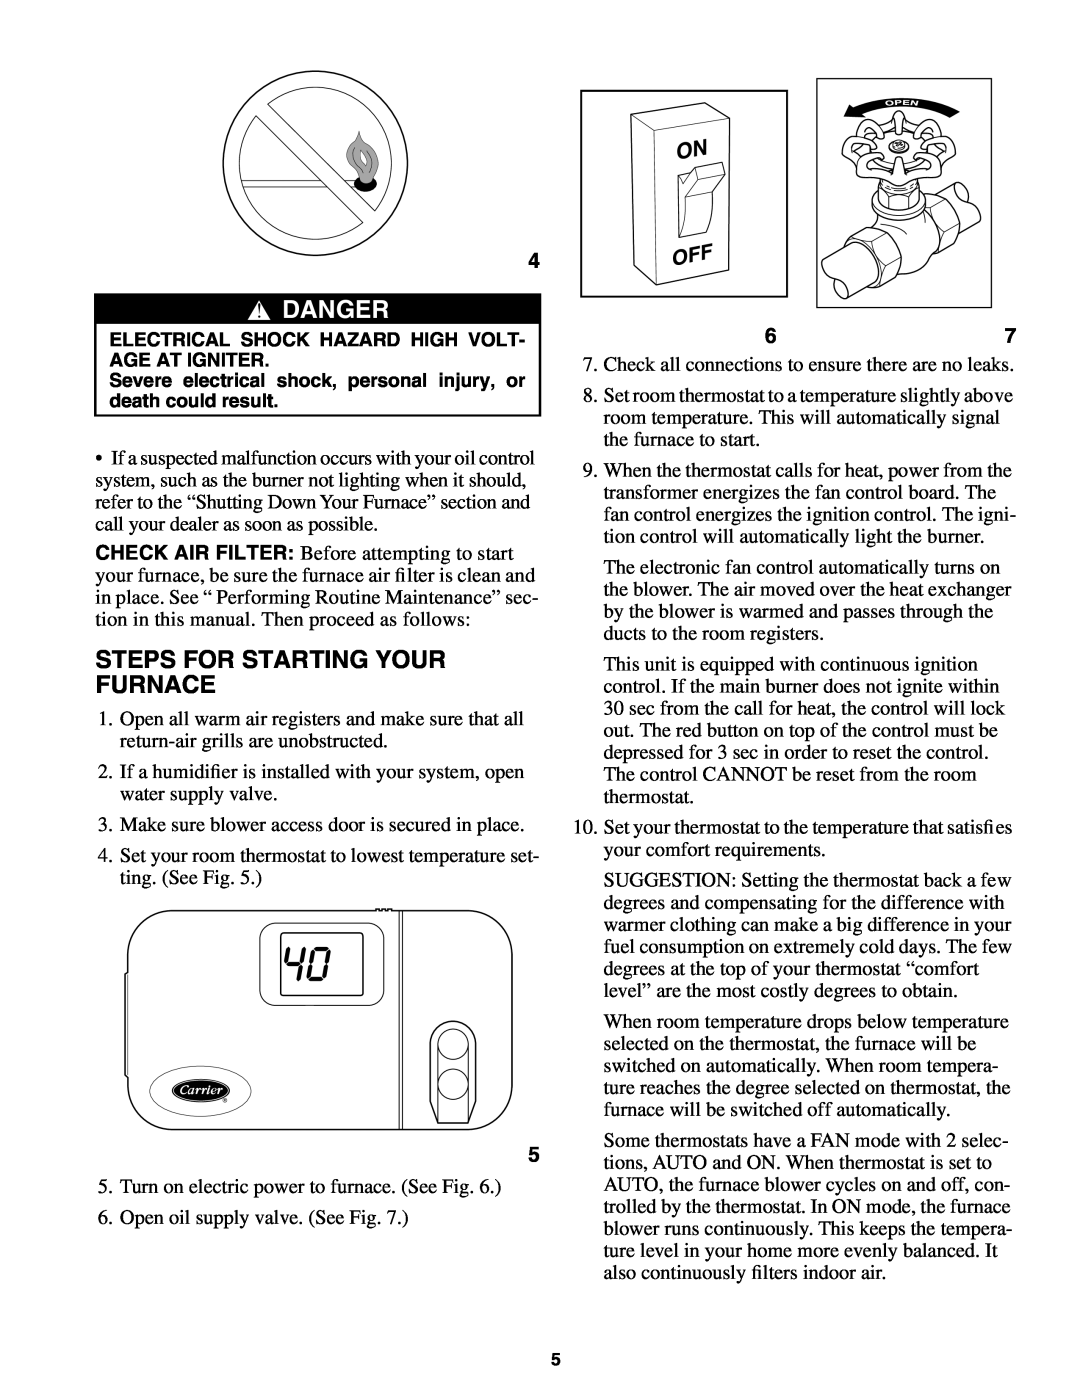 Carrier 58VMR manual Steps For Starting Your Furnace, Danger 